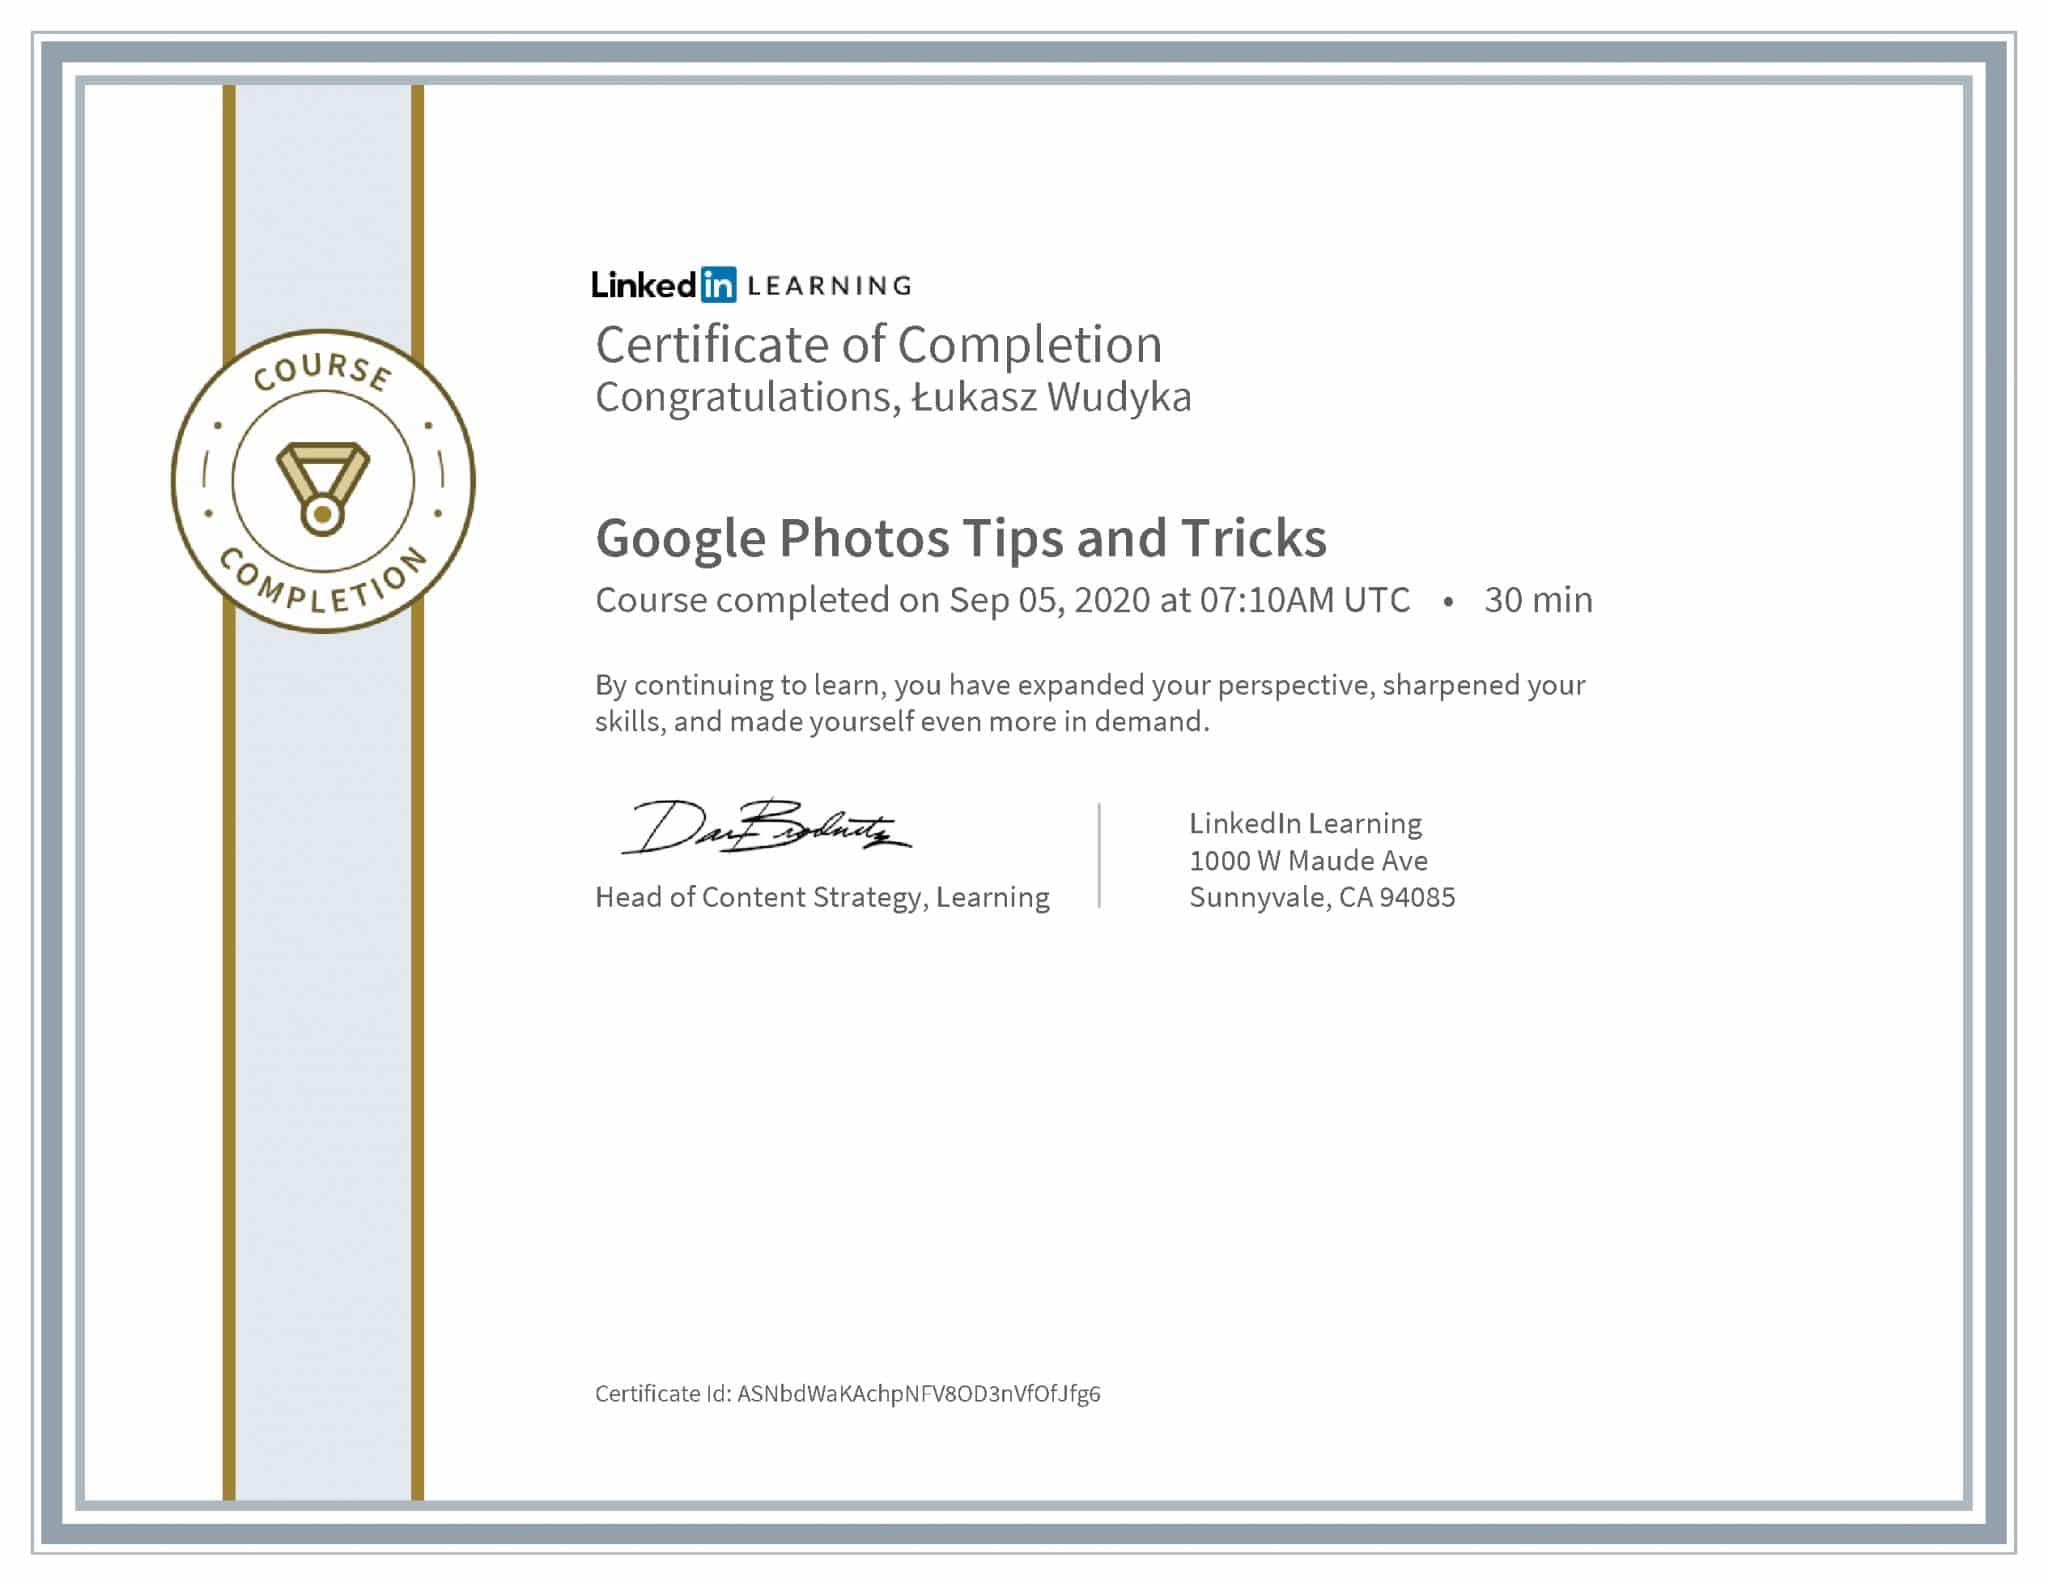 Łukasz Wudyka certyfikat LinkedIn Google Photos Tips and Tricks